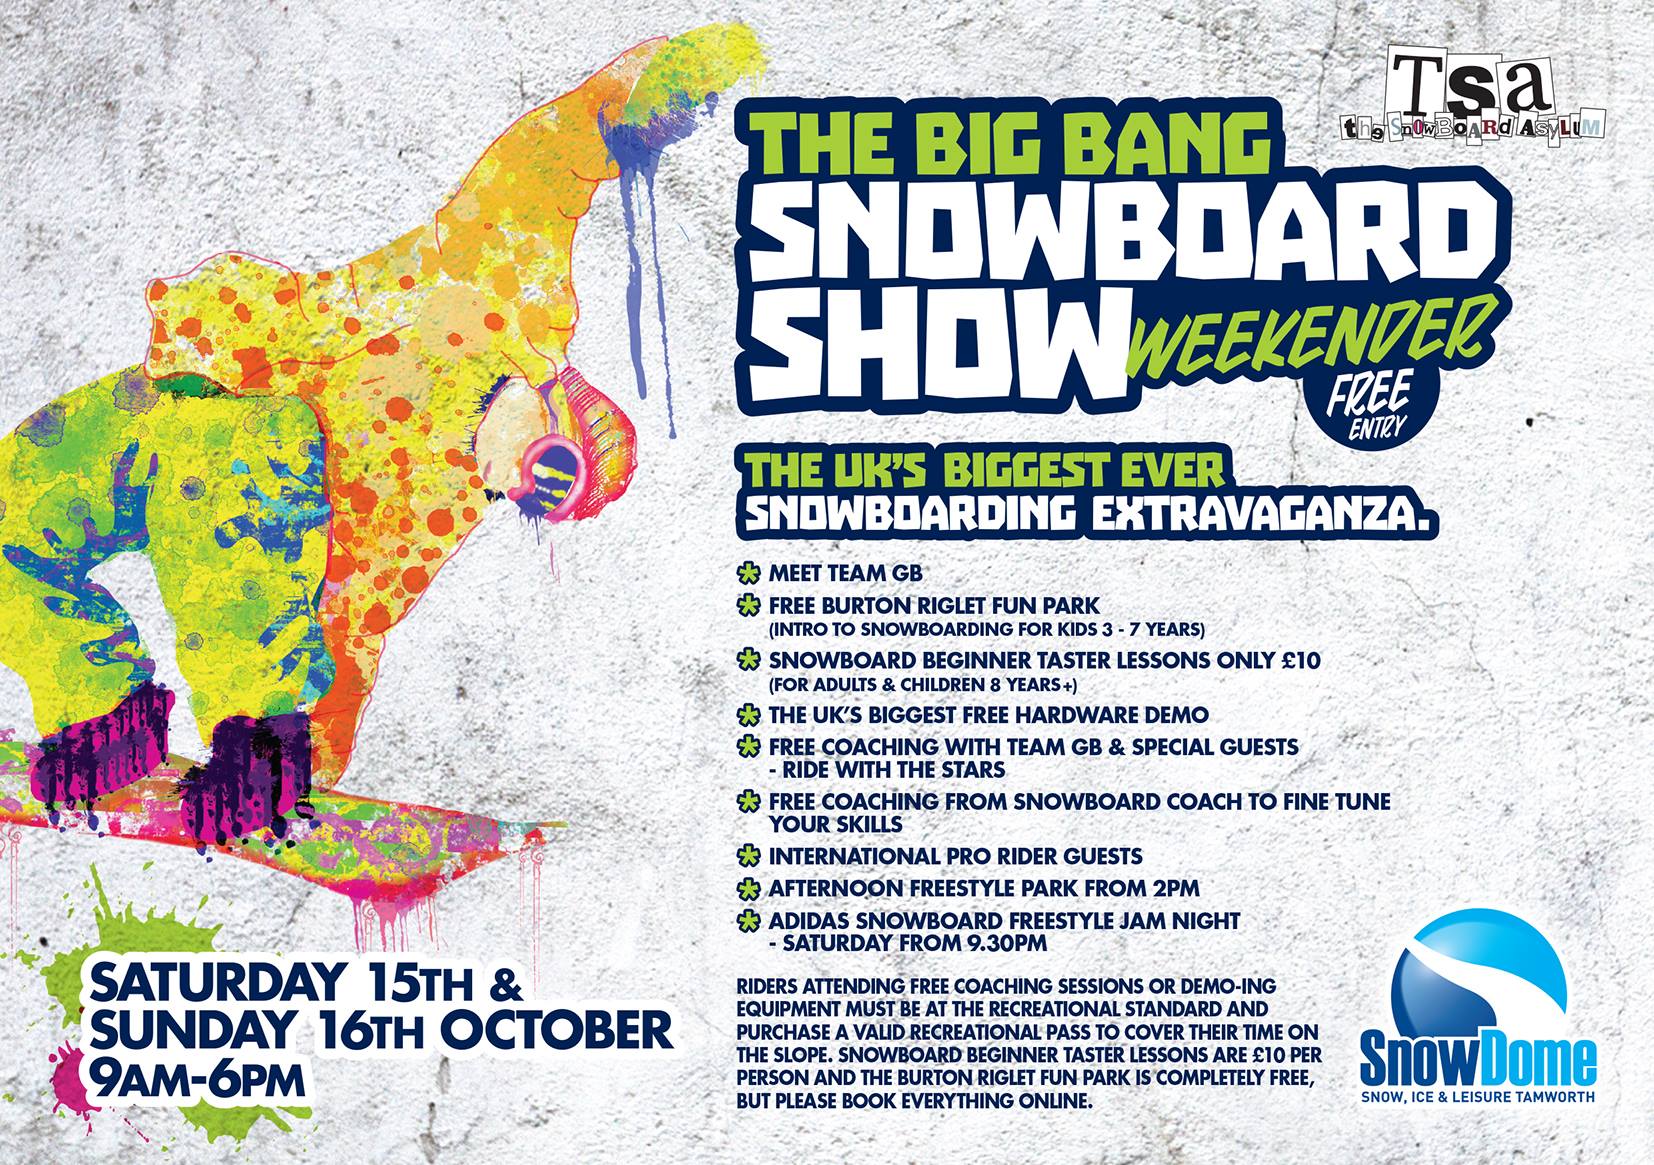 The Snowboard Asylum Big Bang 2016 Snowboard Show at Tamworth Snowdome with MINT Snowboarding